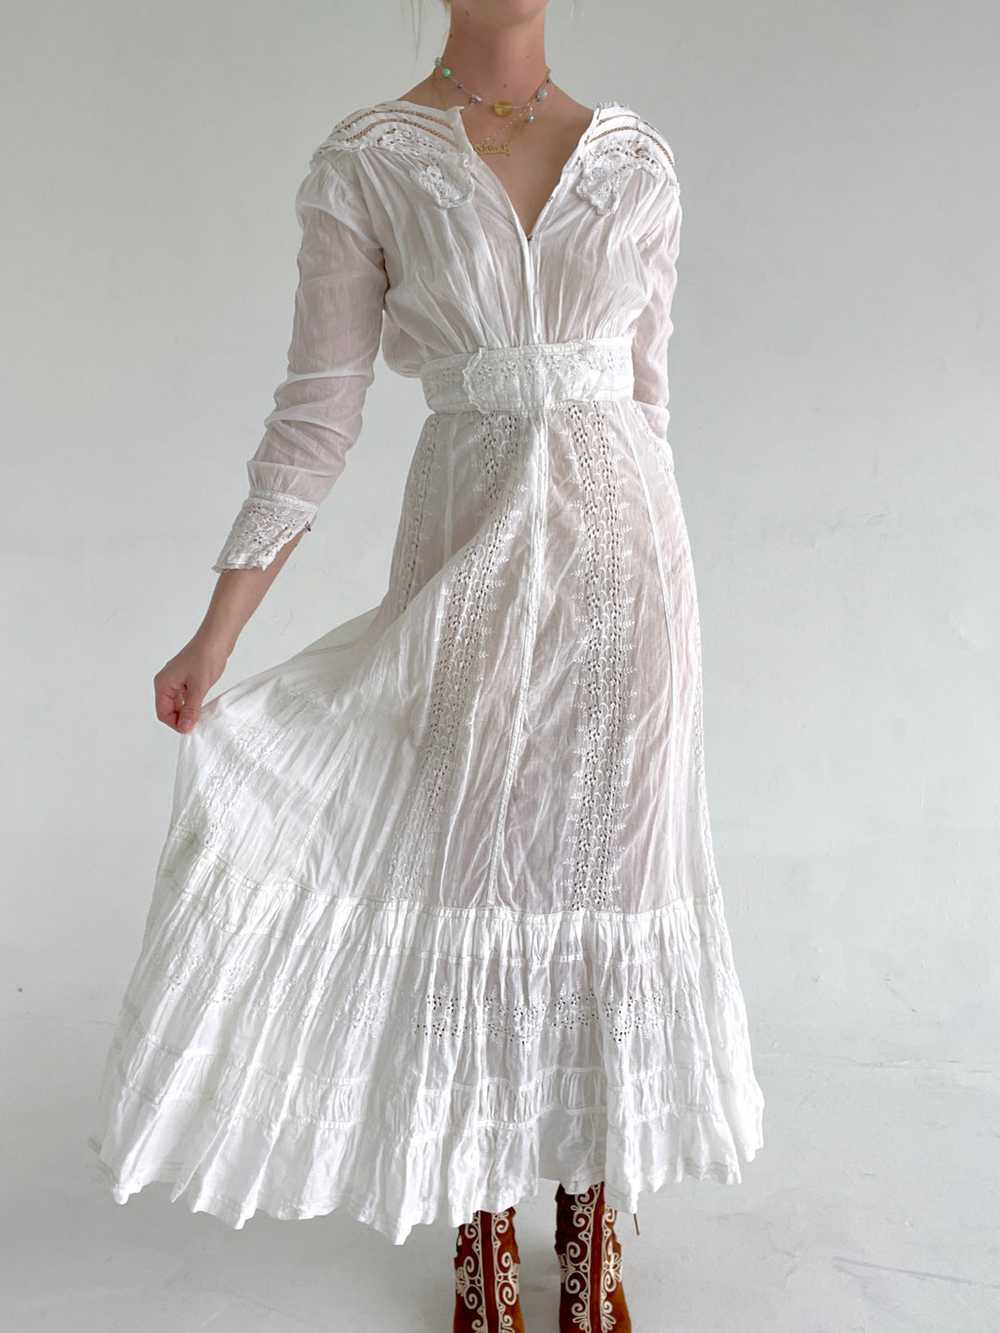 Victorian White Cotton Lawn Dress - image 3